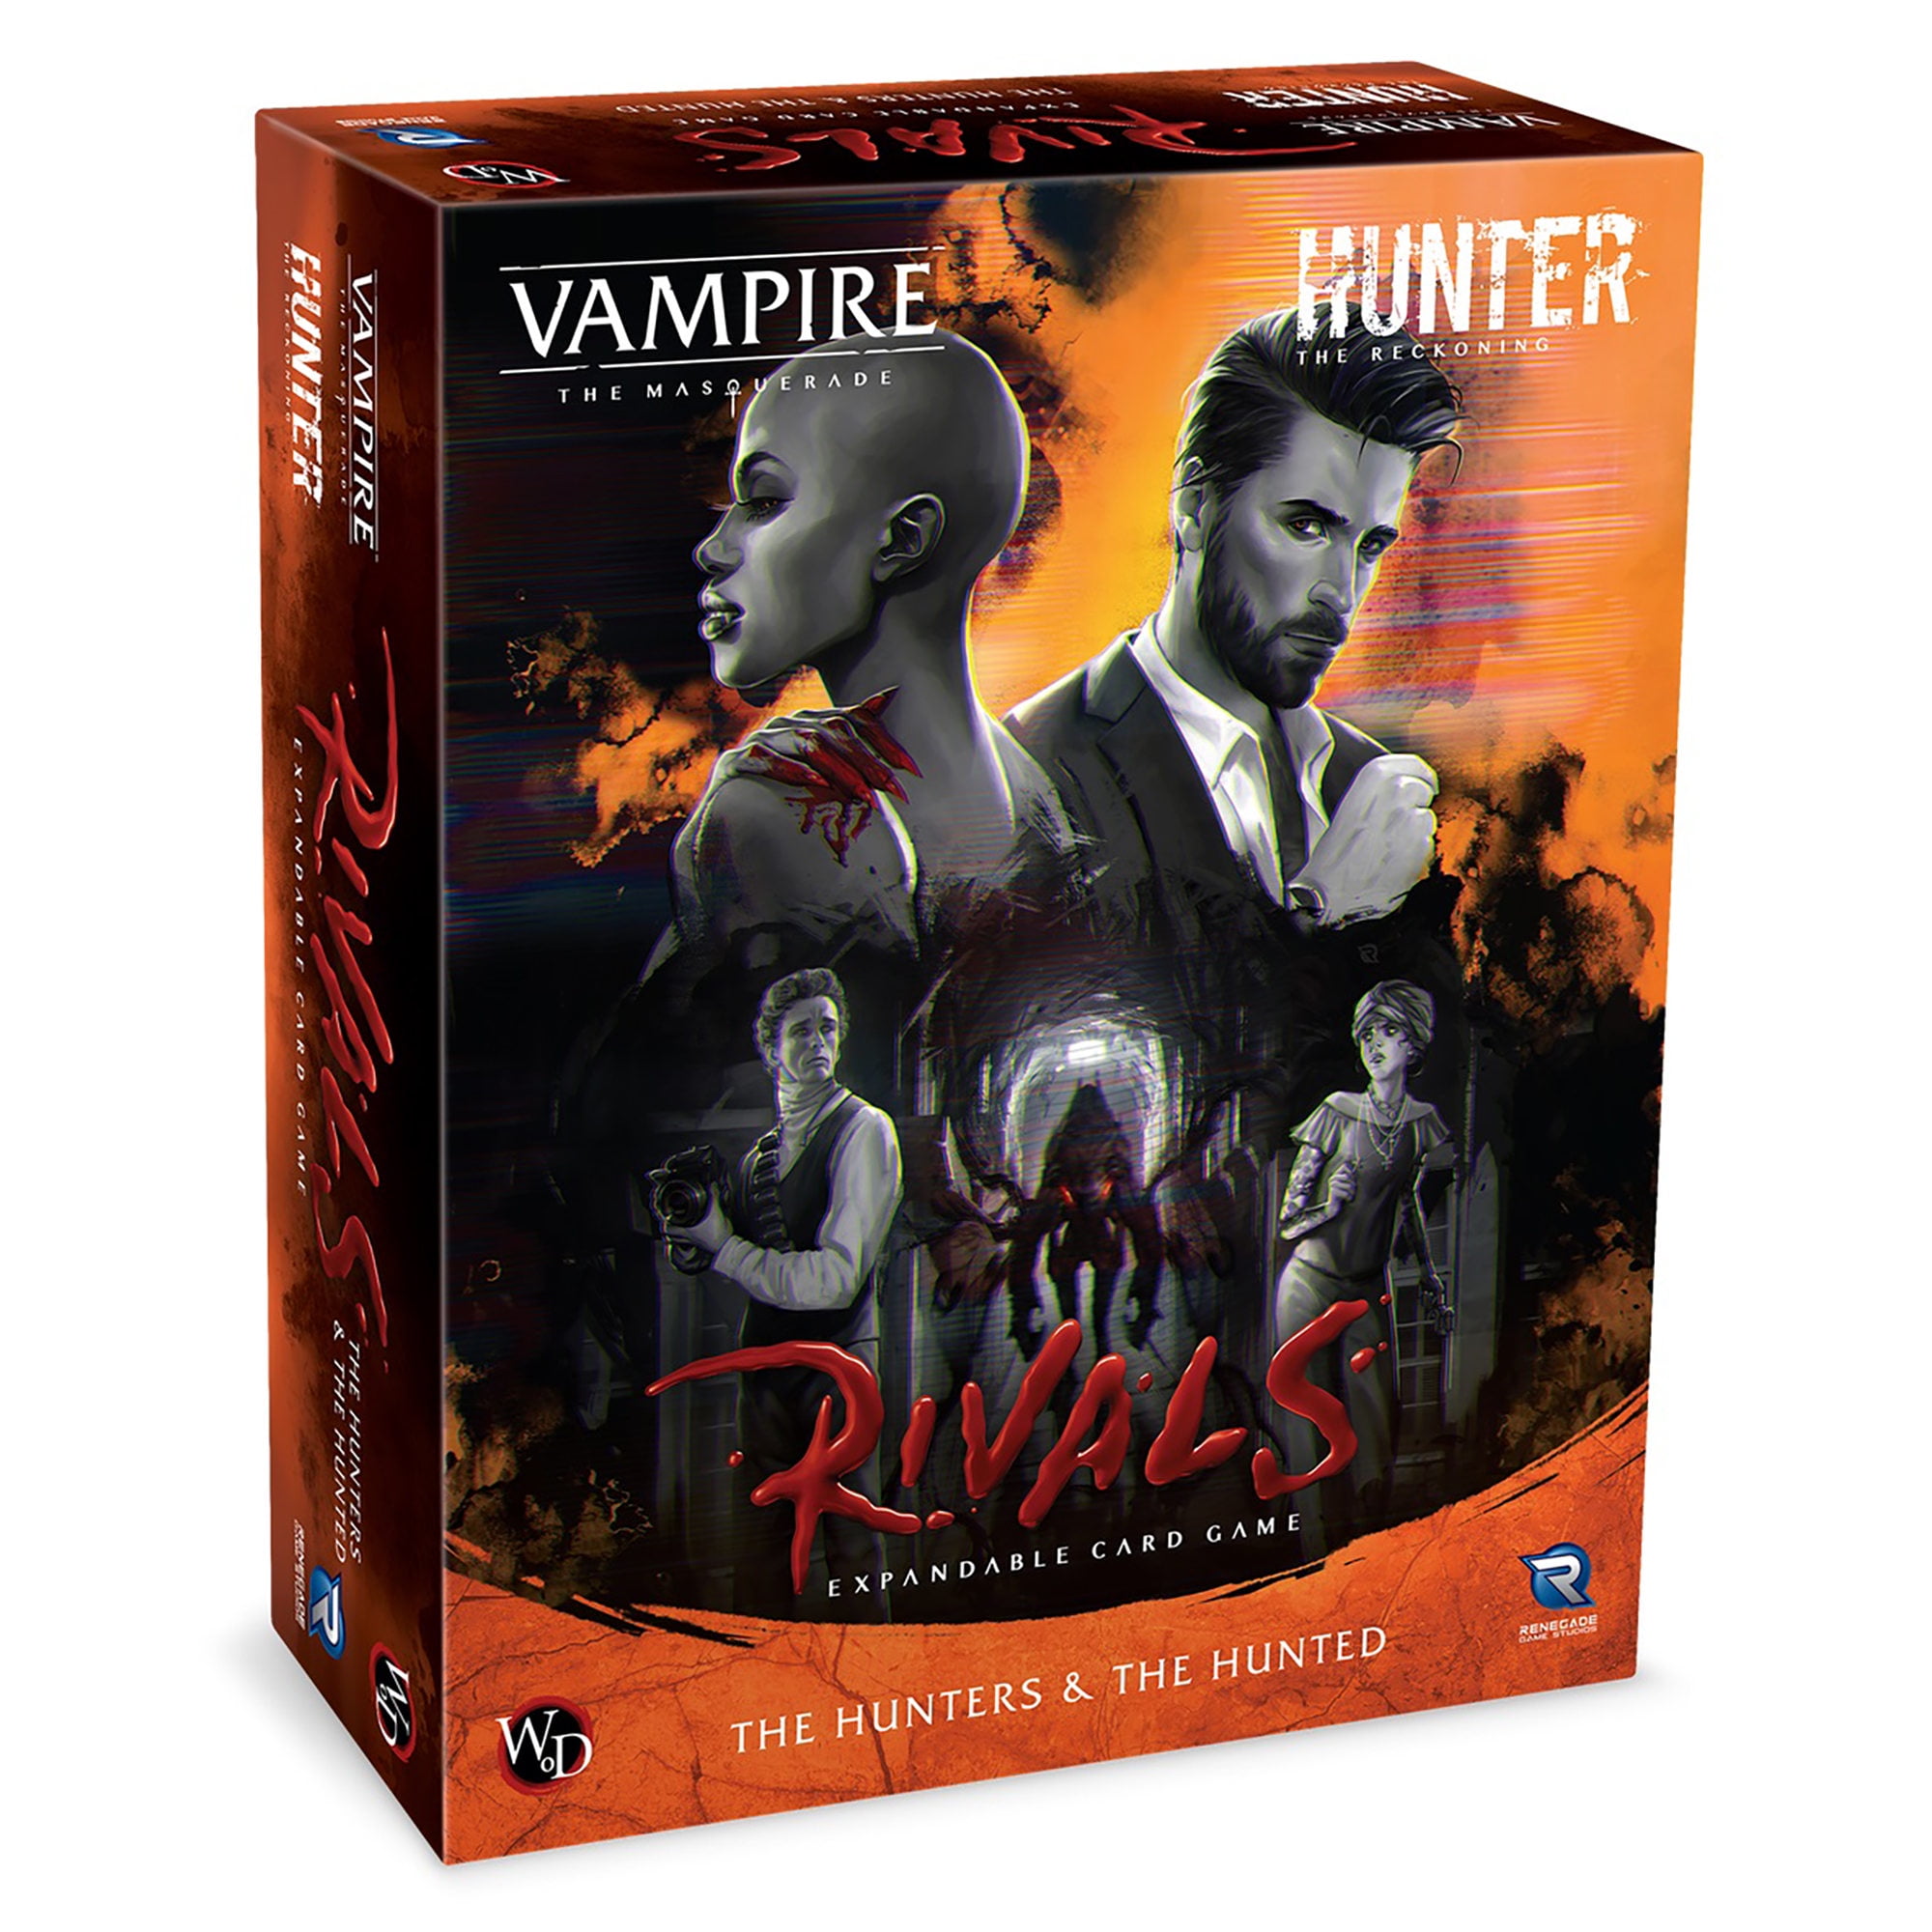 Vampire: The Masquerade Rivals Organized Play Kit Season 1.1 PRE-ORDER